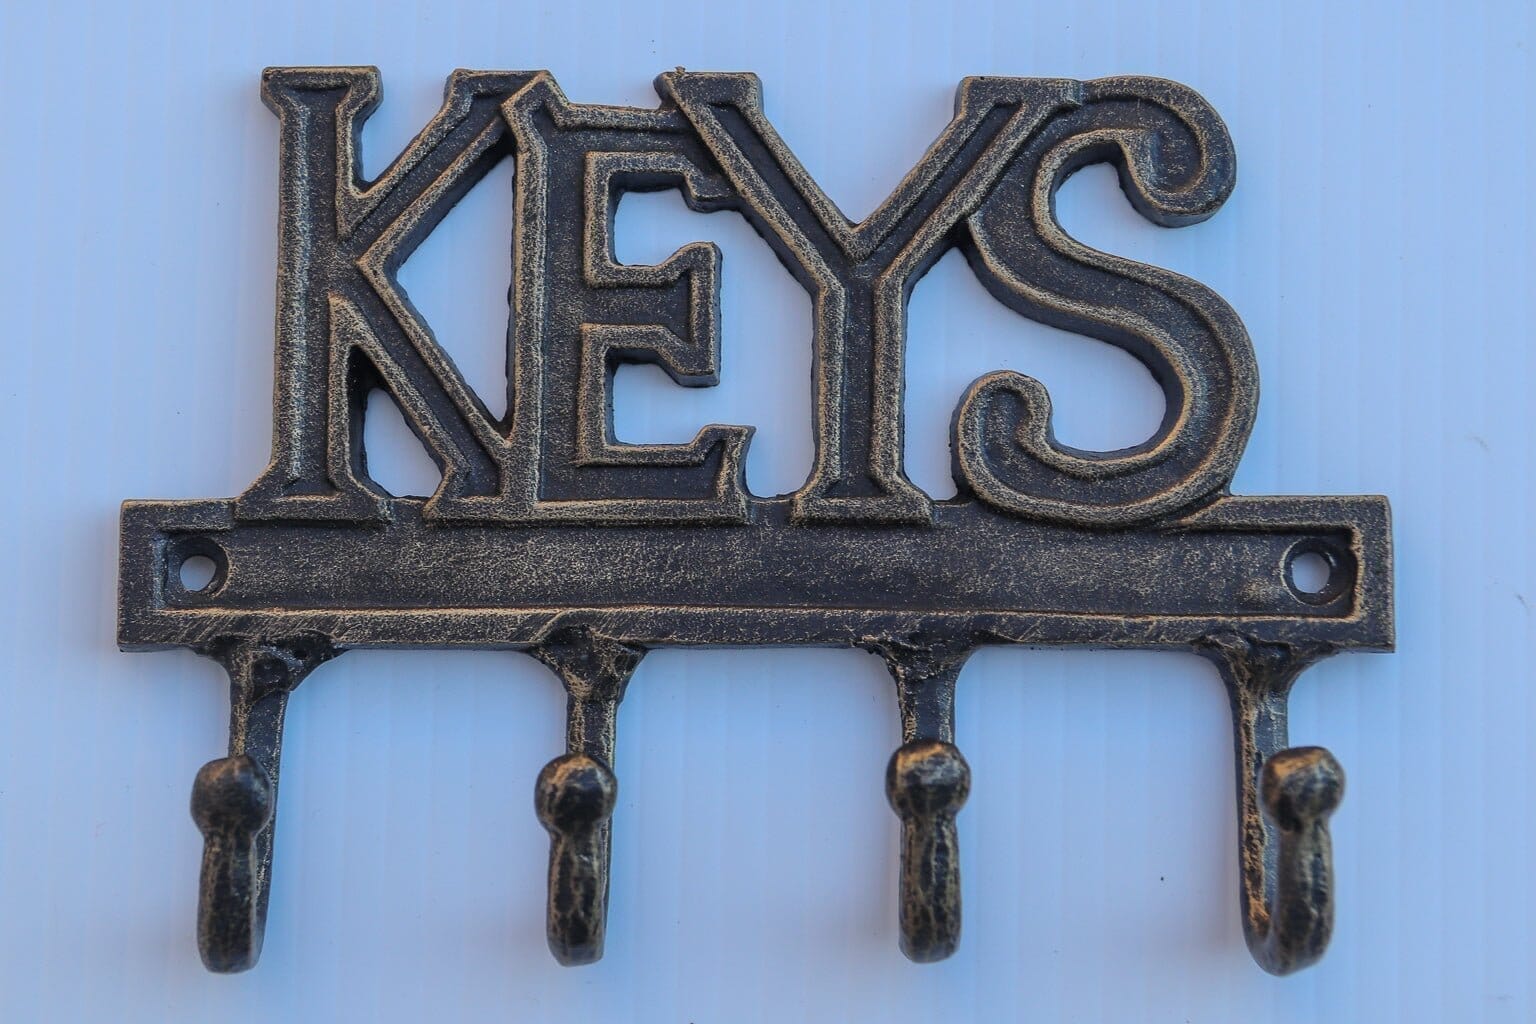 KEYS Entryway Wall Hanger - Cast Iron Metal - Key Organizer - 4